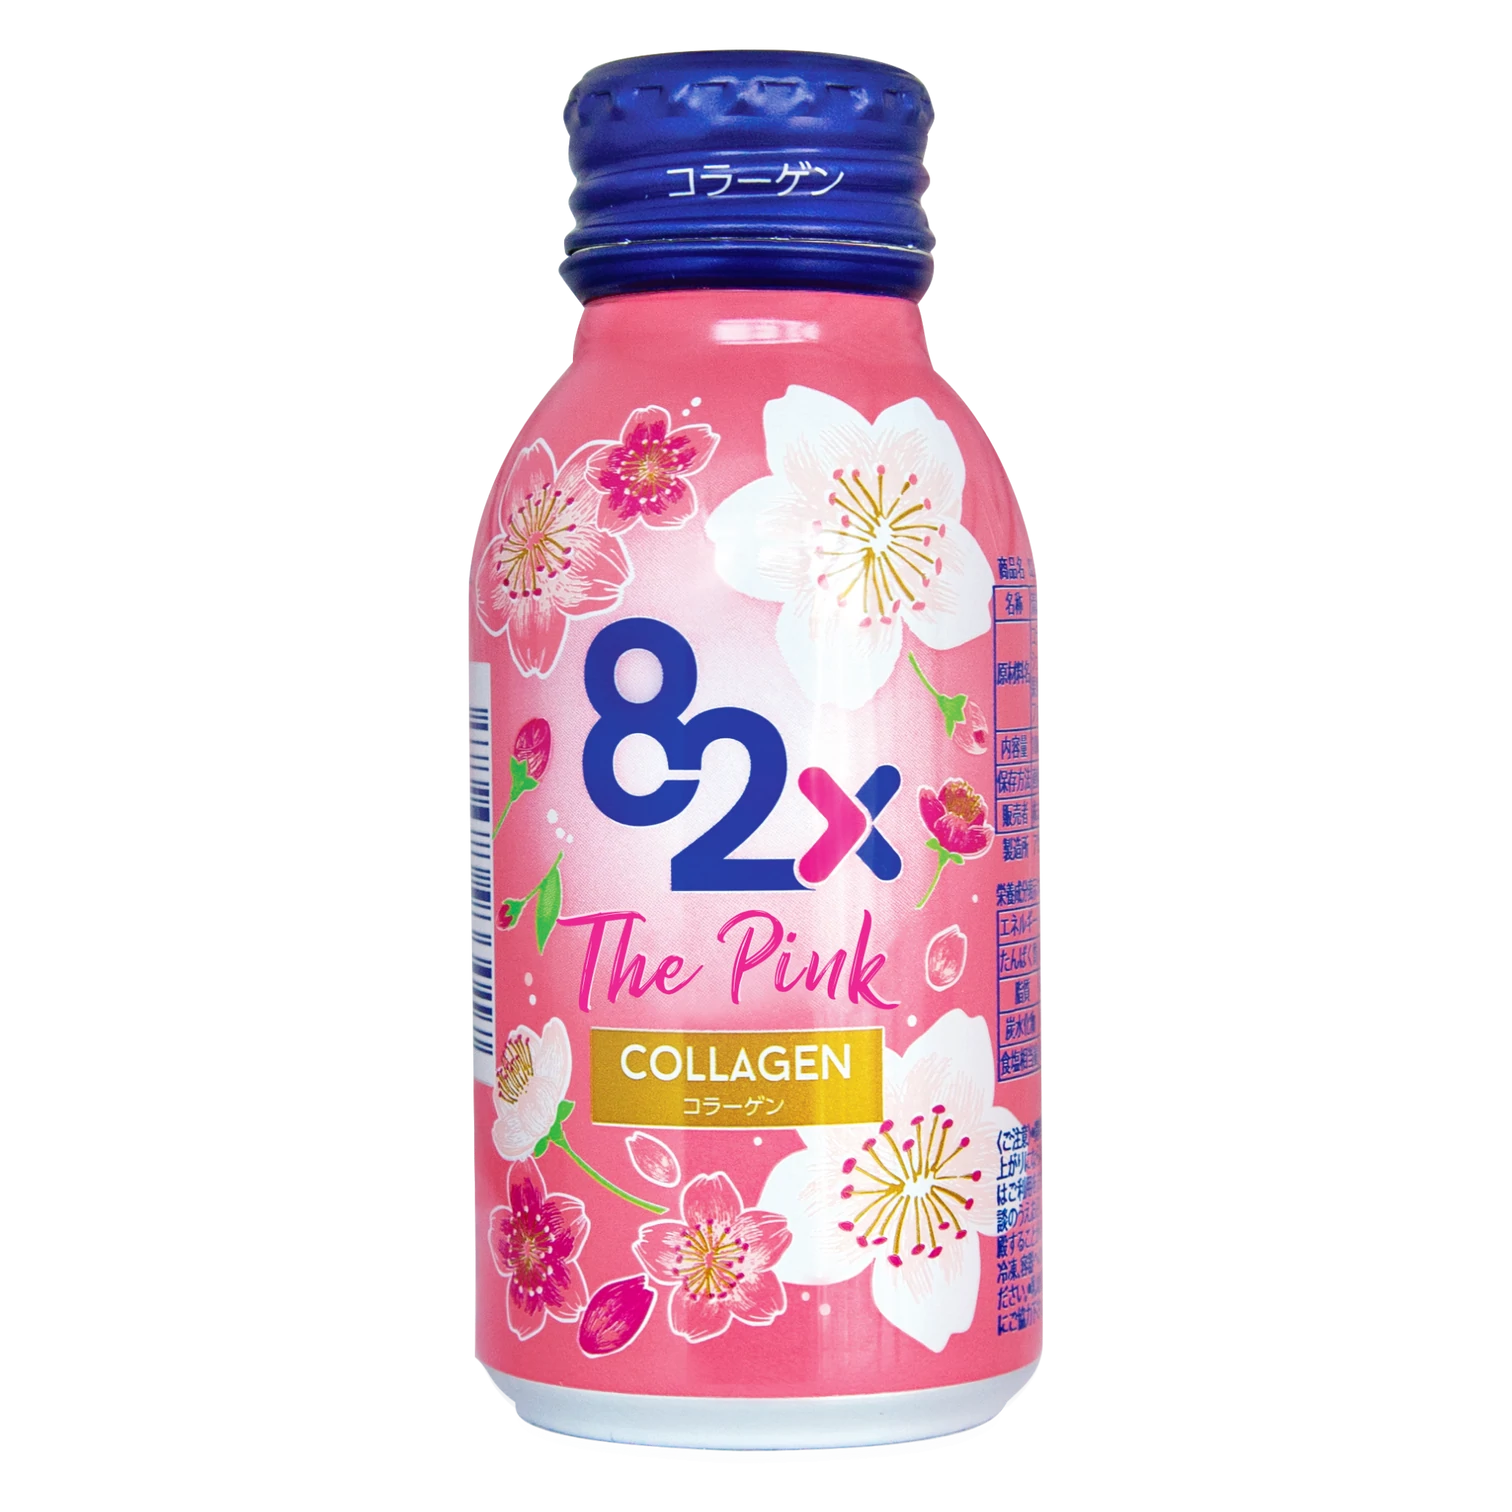 82x The Pink Collagen